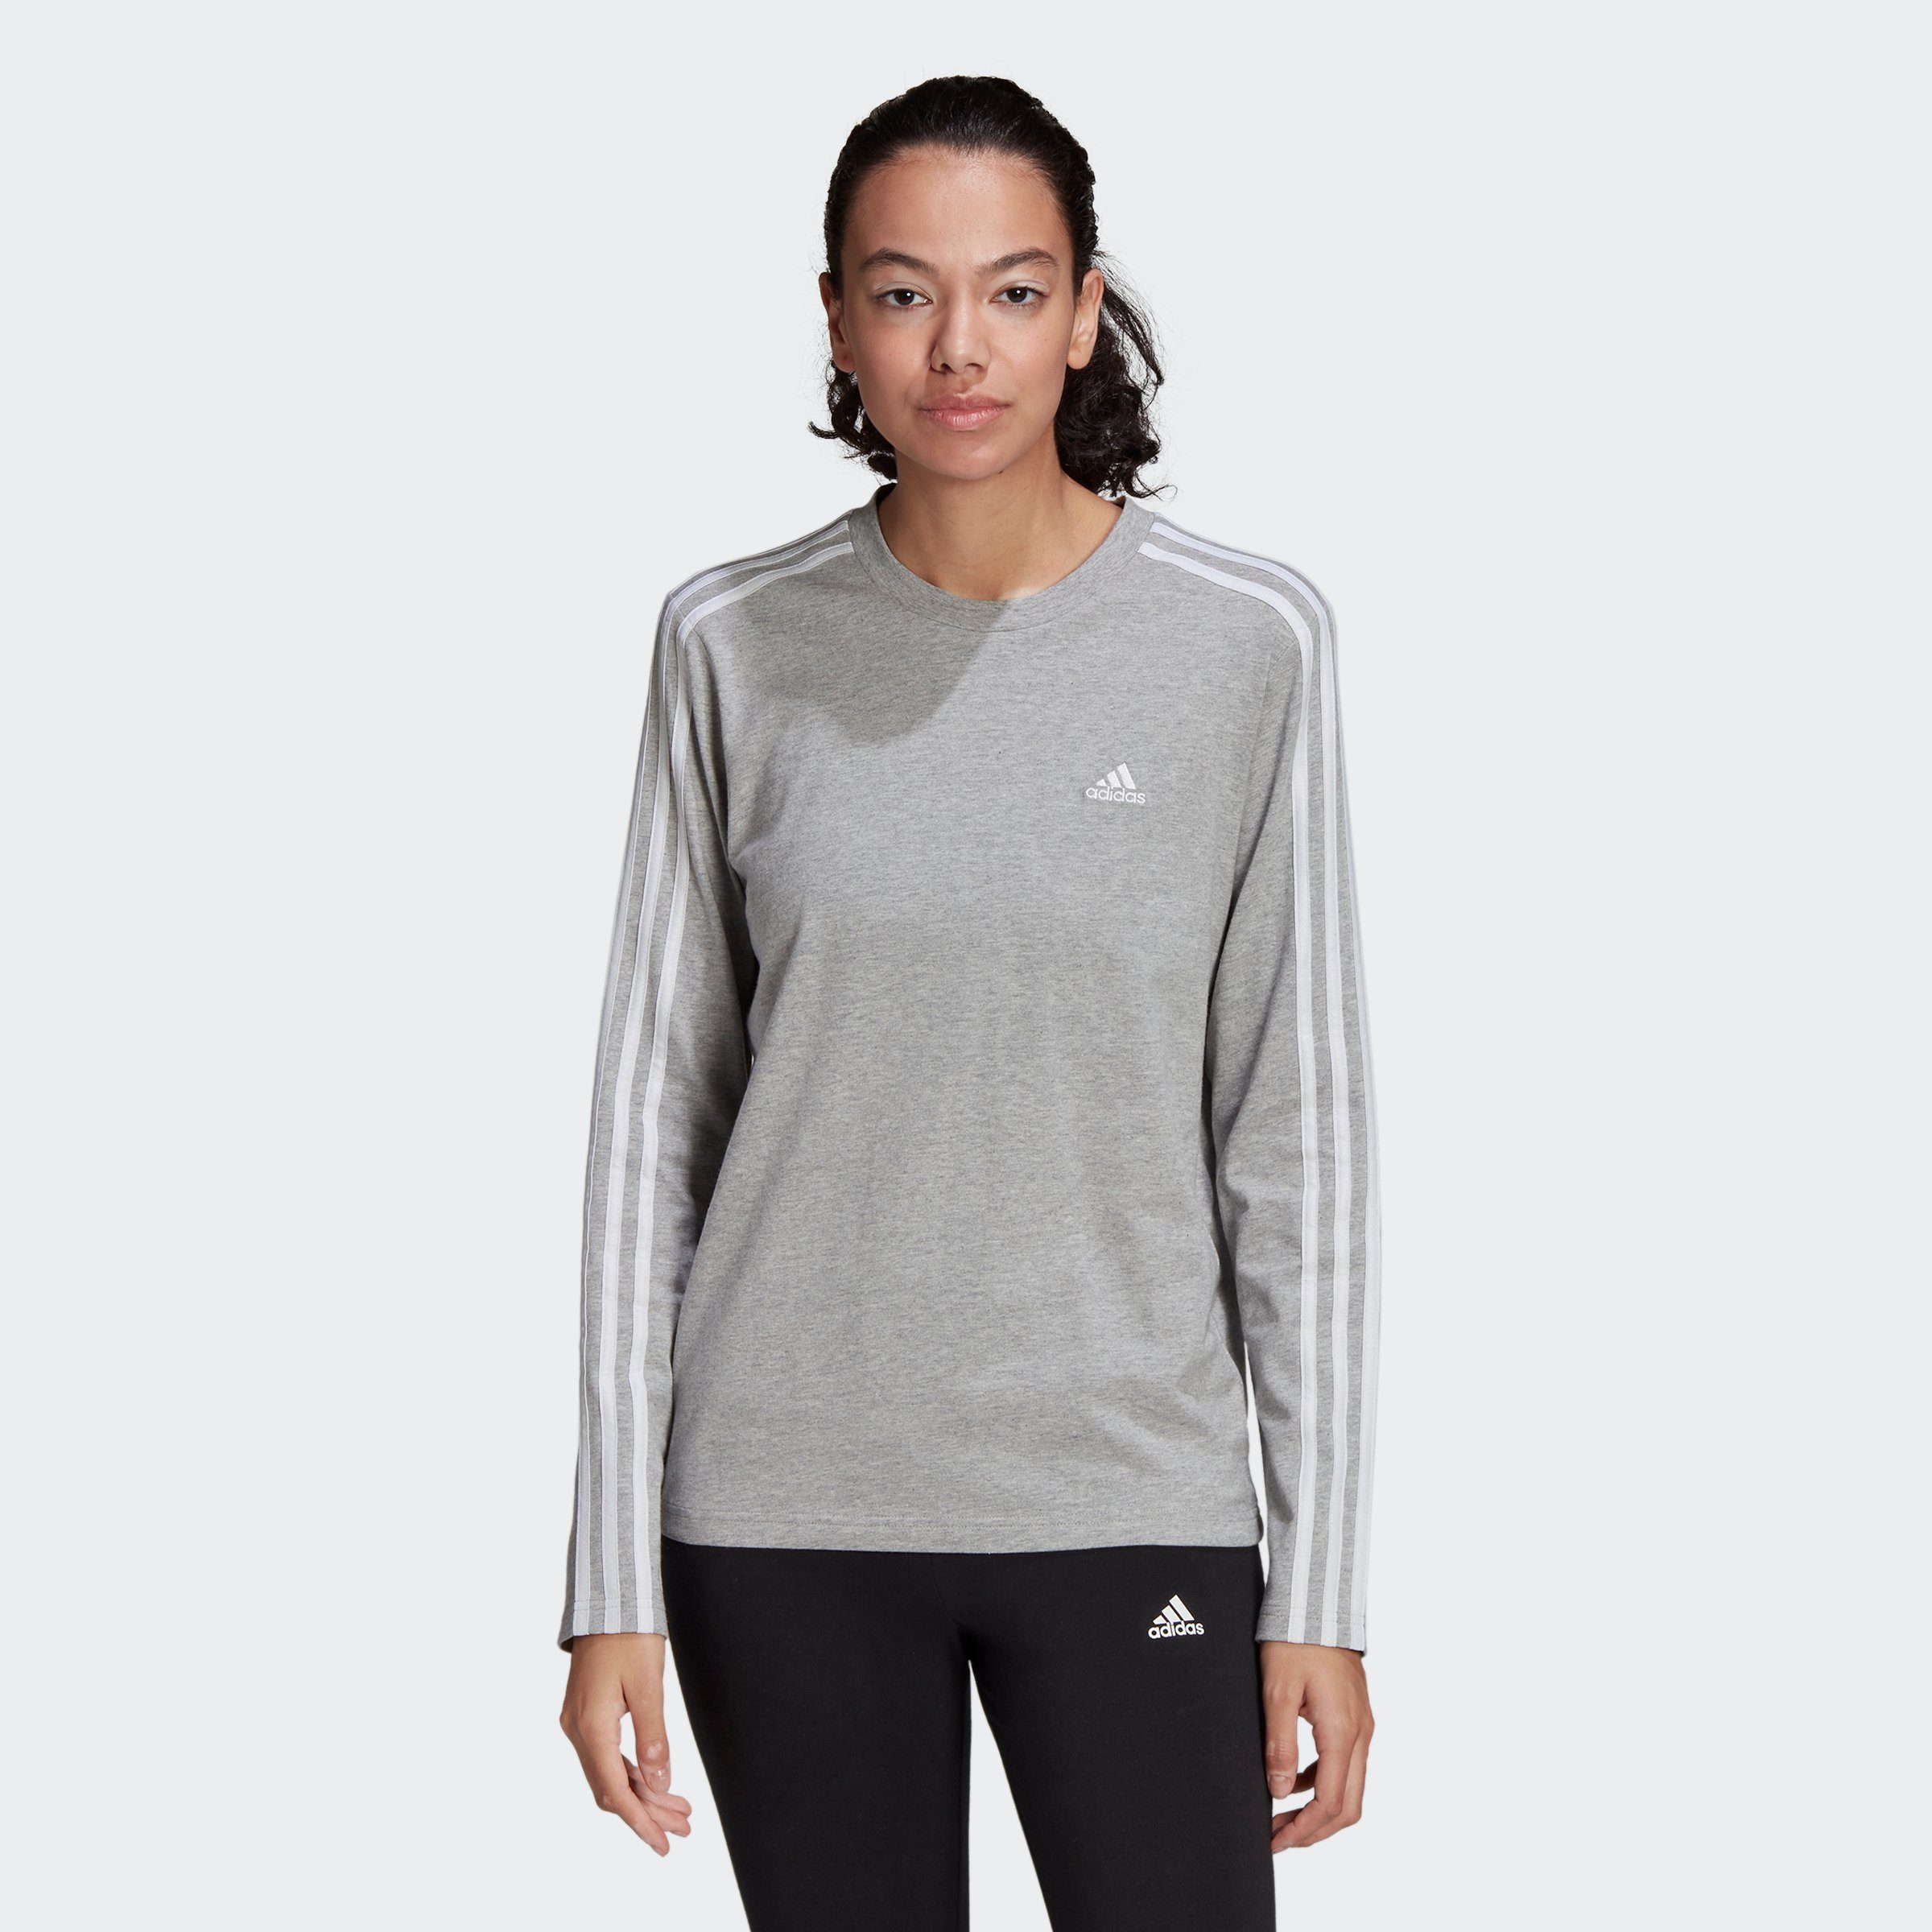 3STREIFEN Grey ESSENTIALS White Langarmshirt adidas / LONGSLEEVE Medium Sportswear Heather